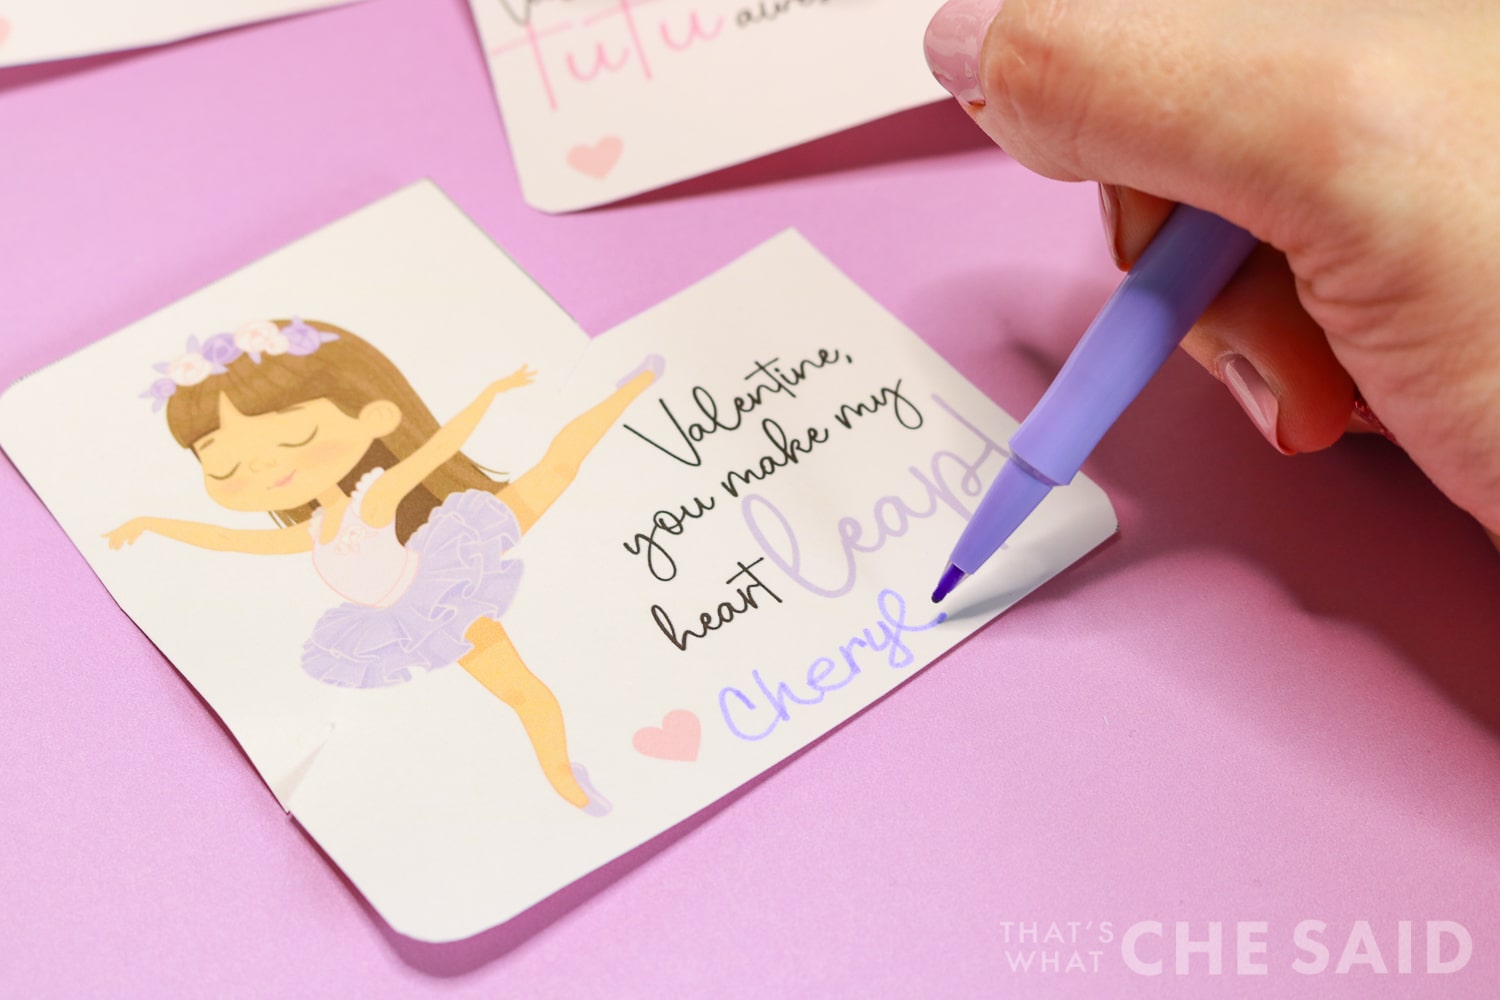 Signing Ballerina Cards with felt flair pen